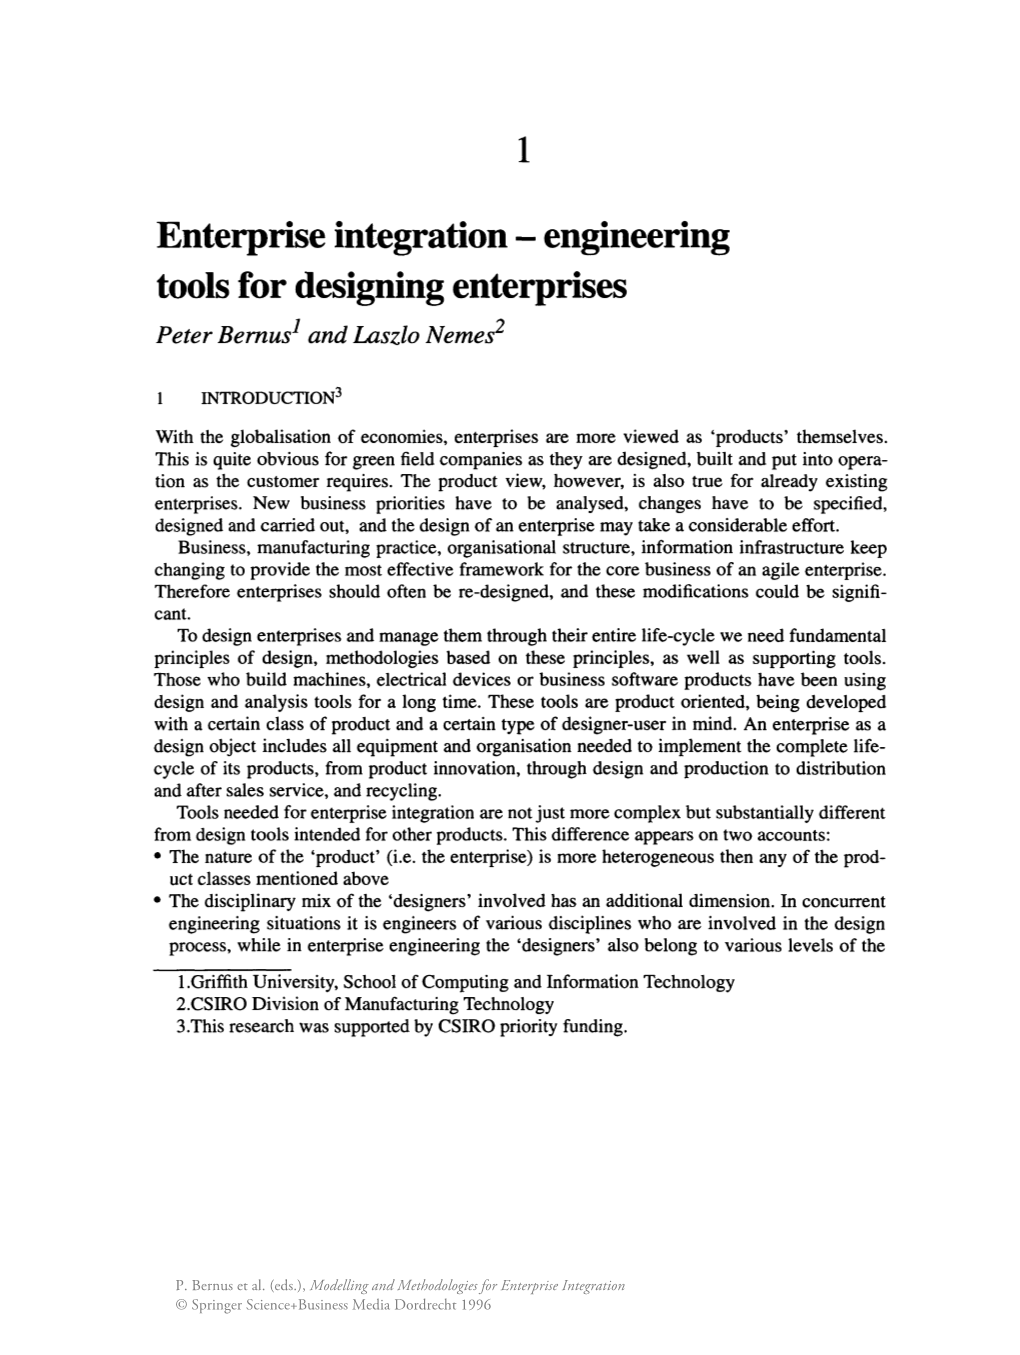 Enterprise Integration - Engineering Tools for Designing Enterprises Peter Bemus1 and Laszlo Nemes2